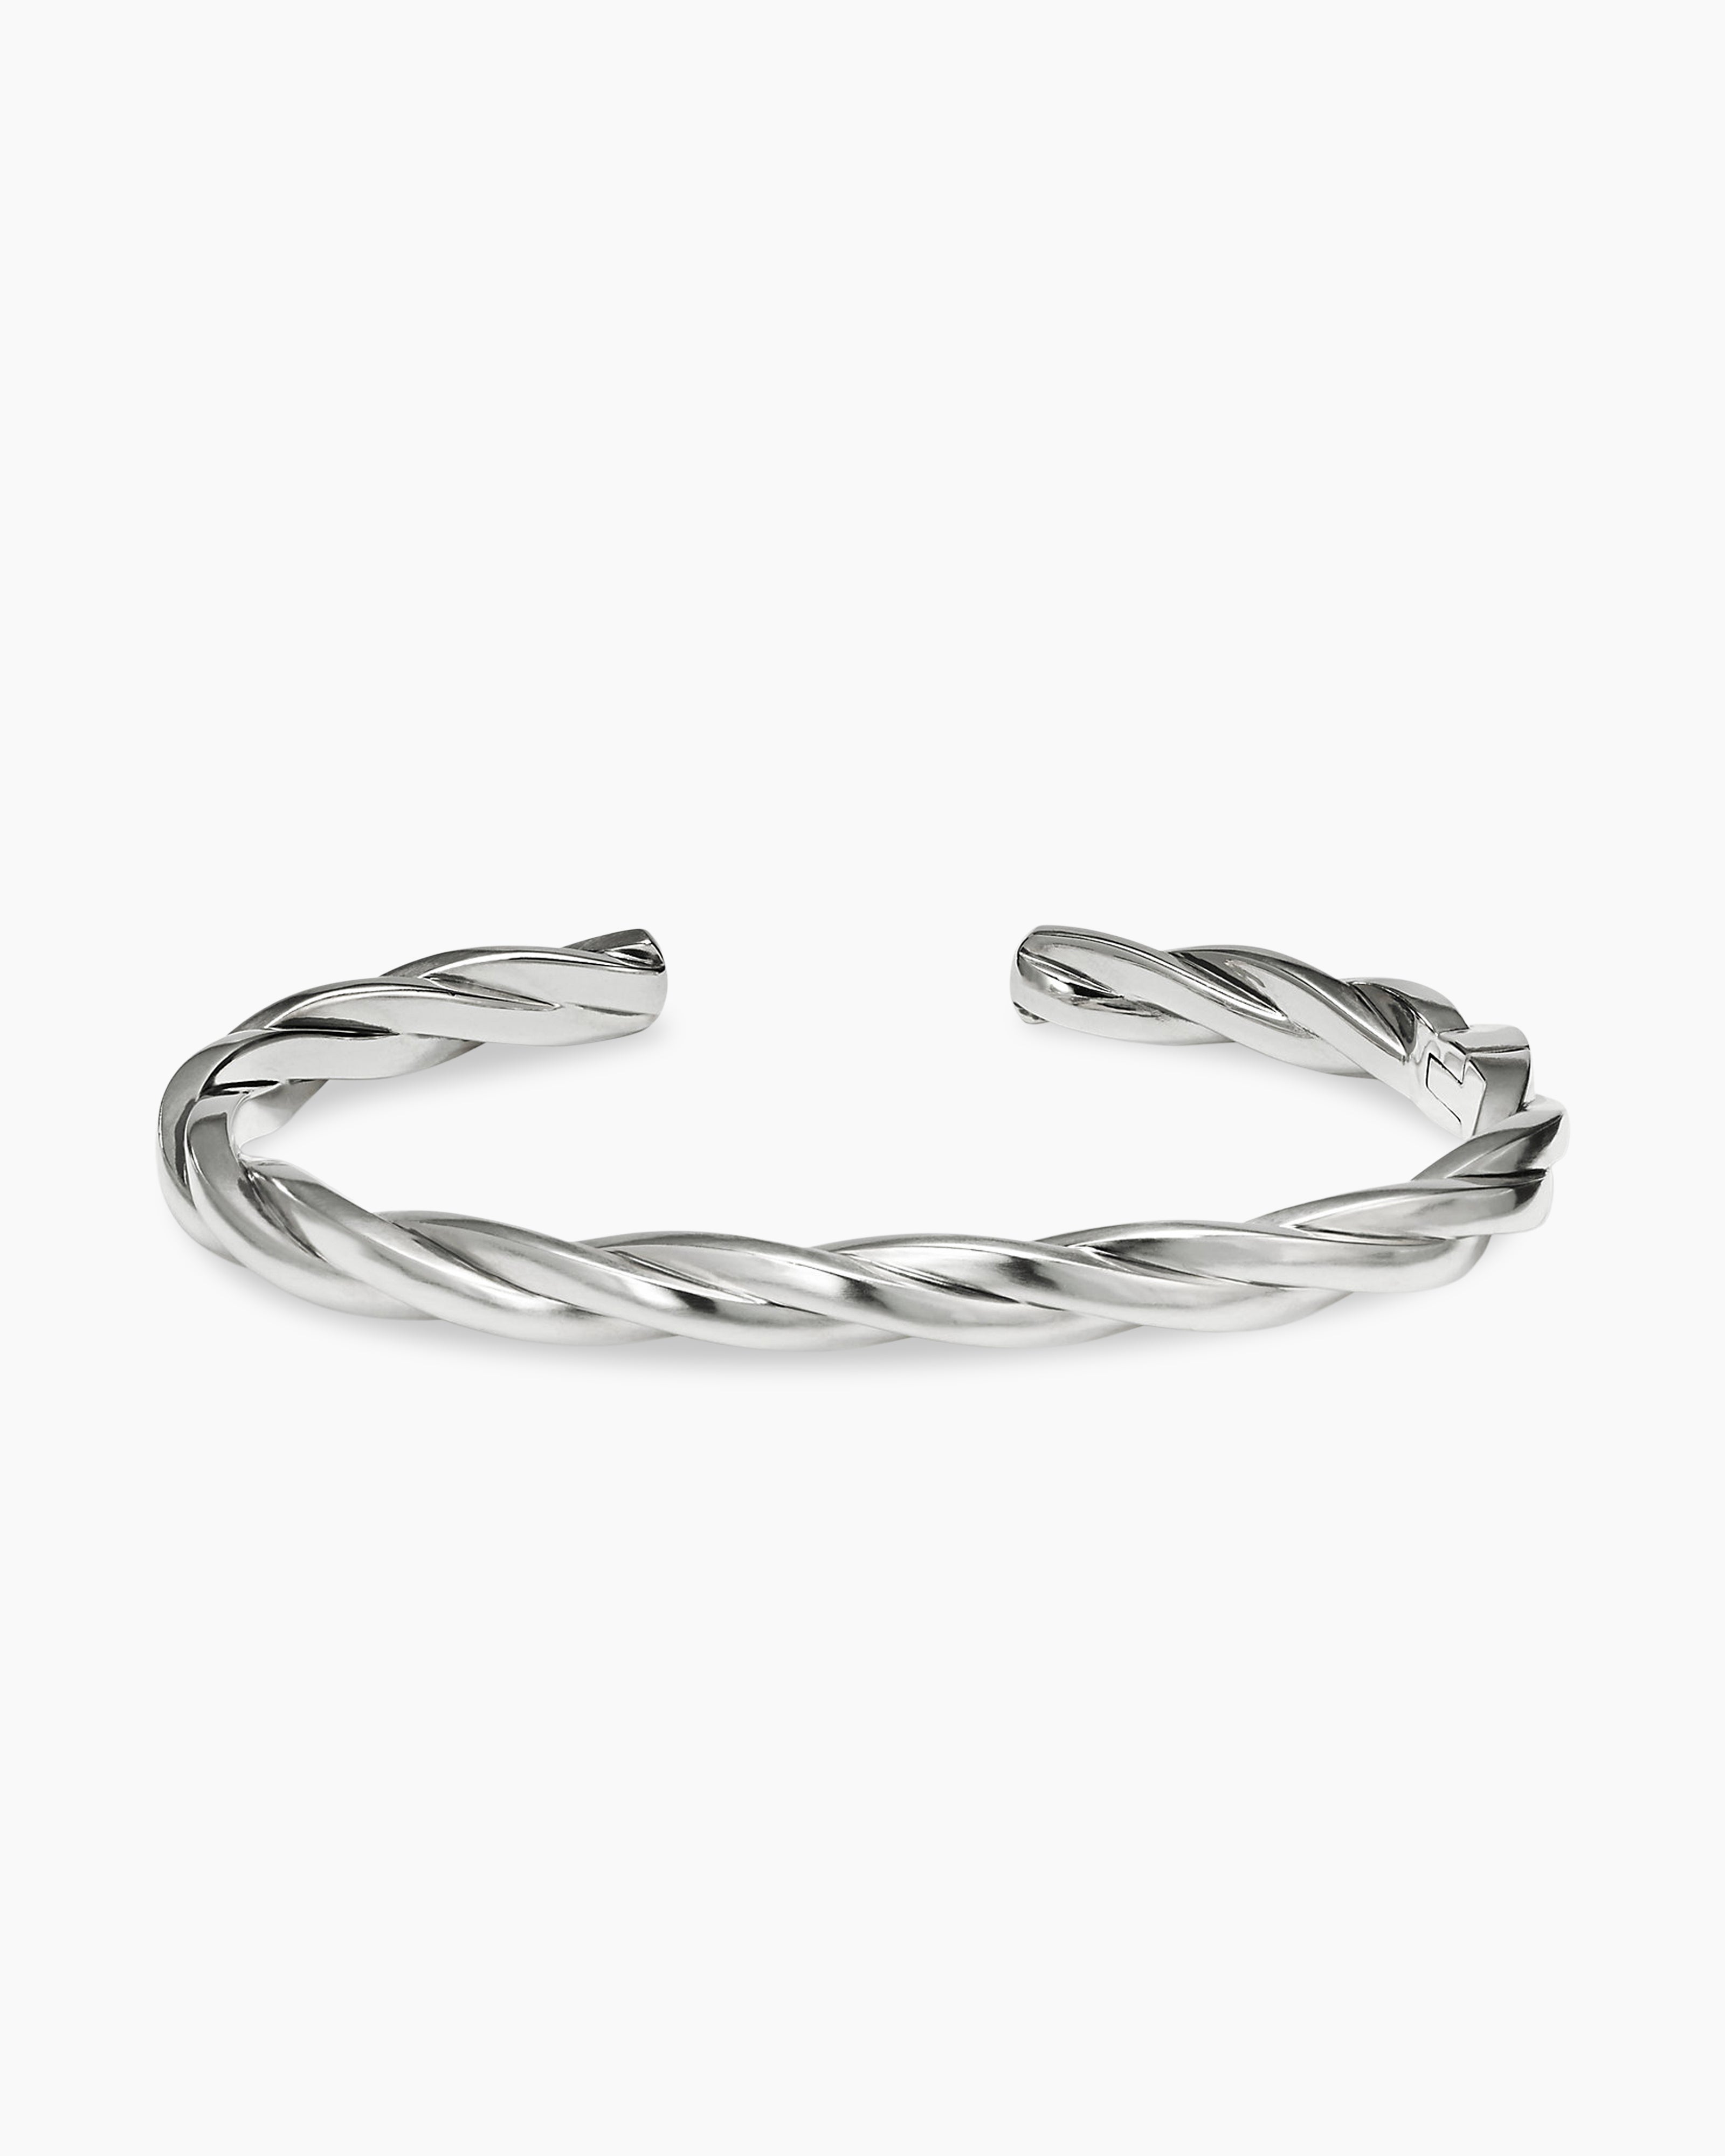 Cable Cuff Bracelet in Sterling Silver, 6mm | David Yurman